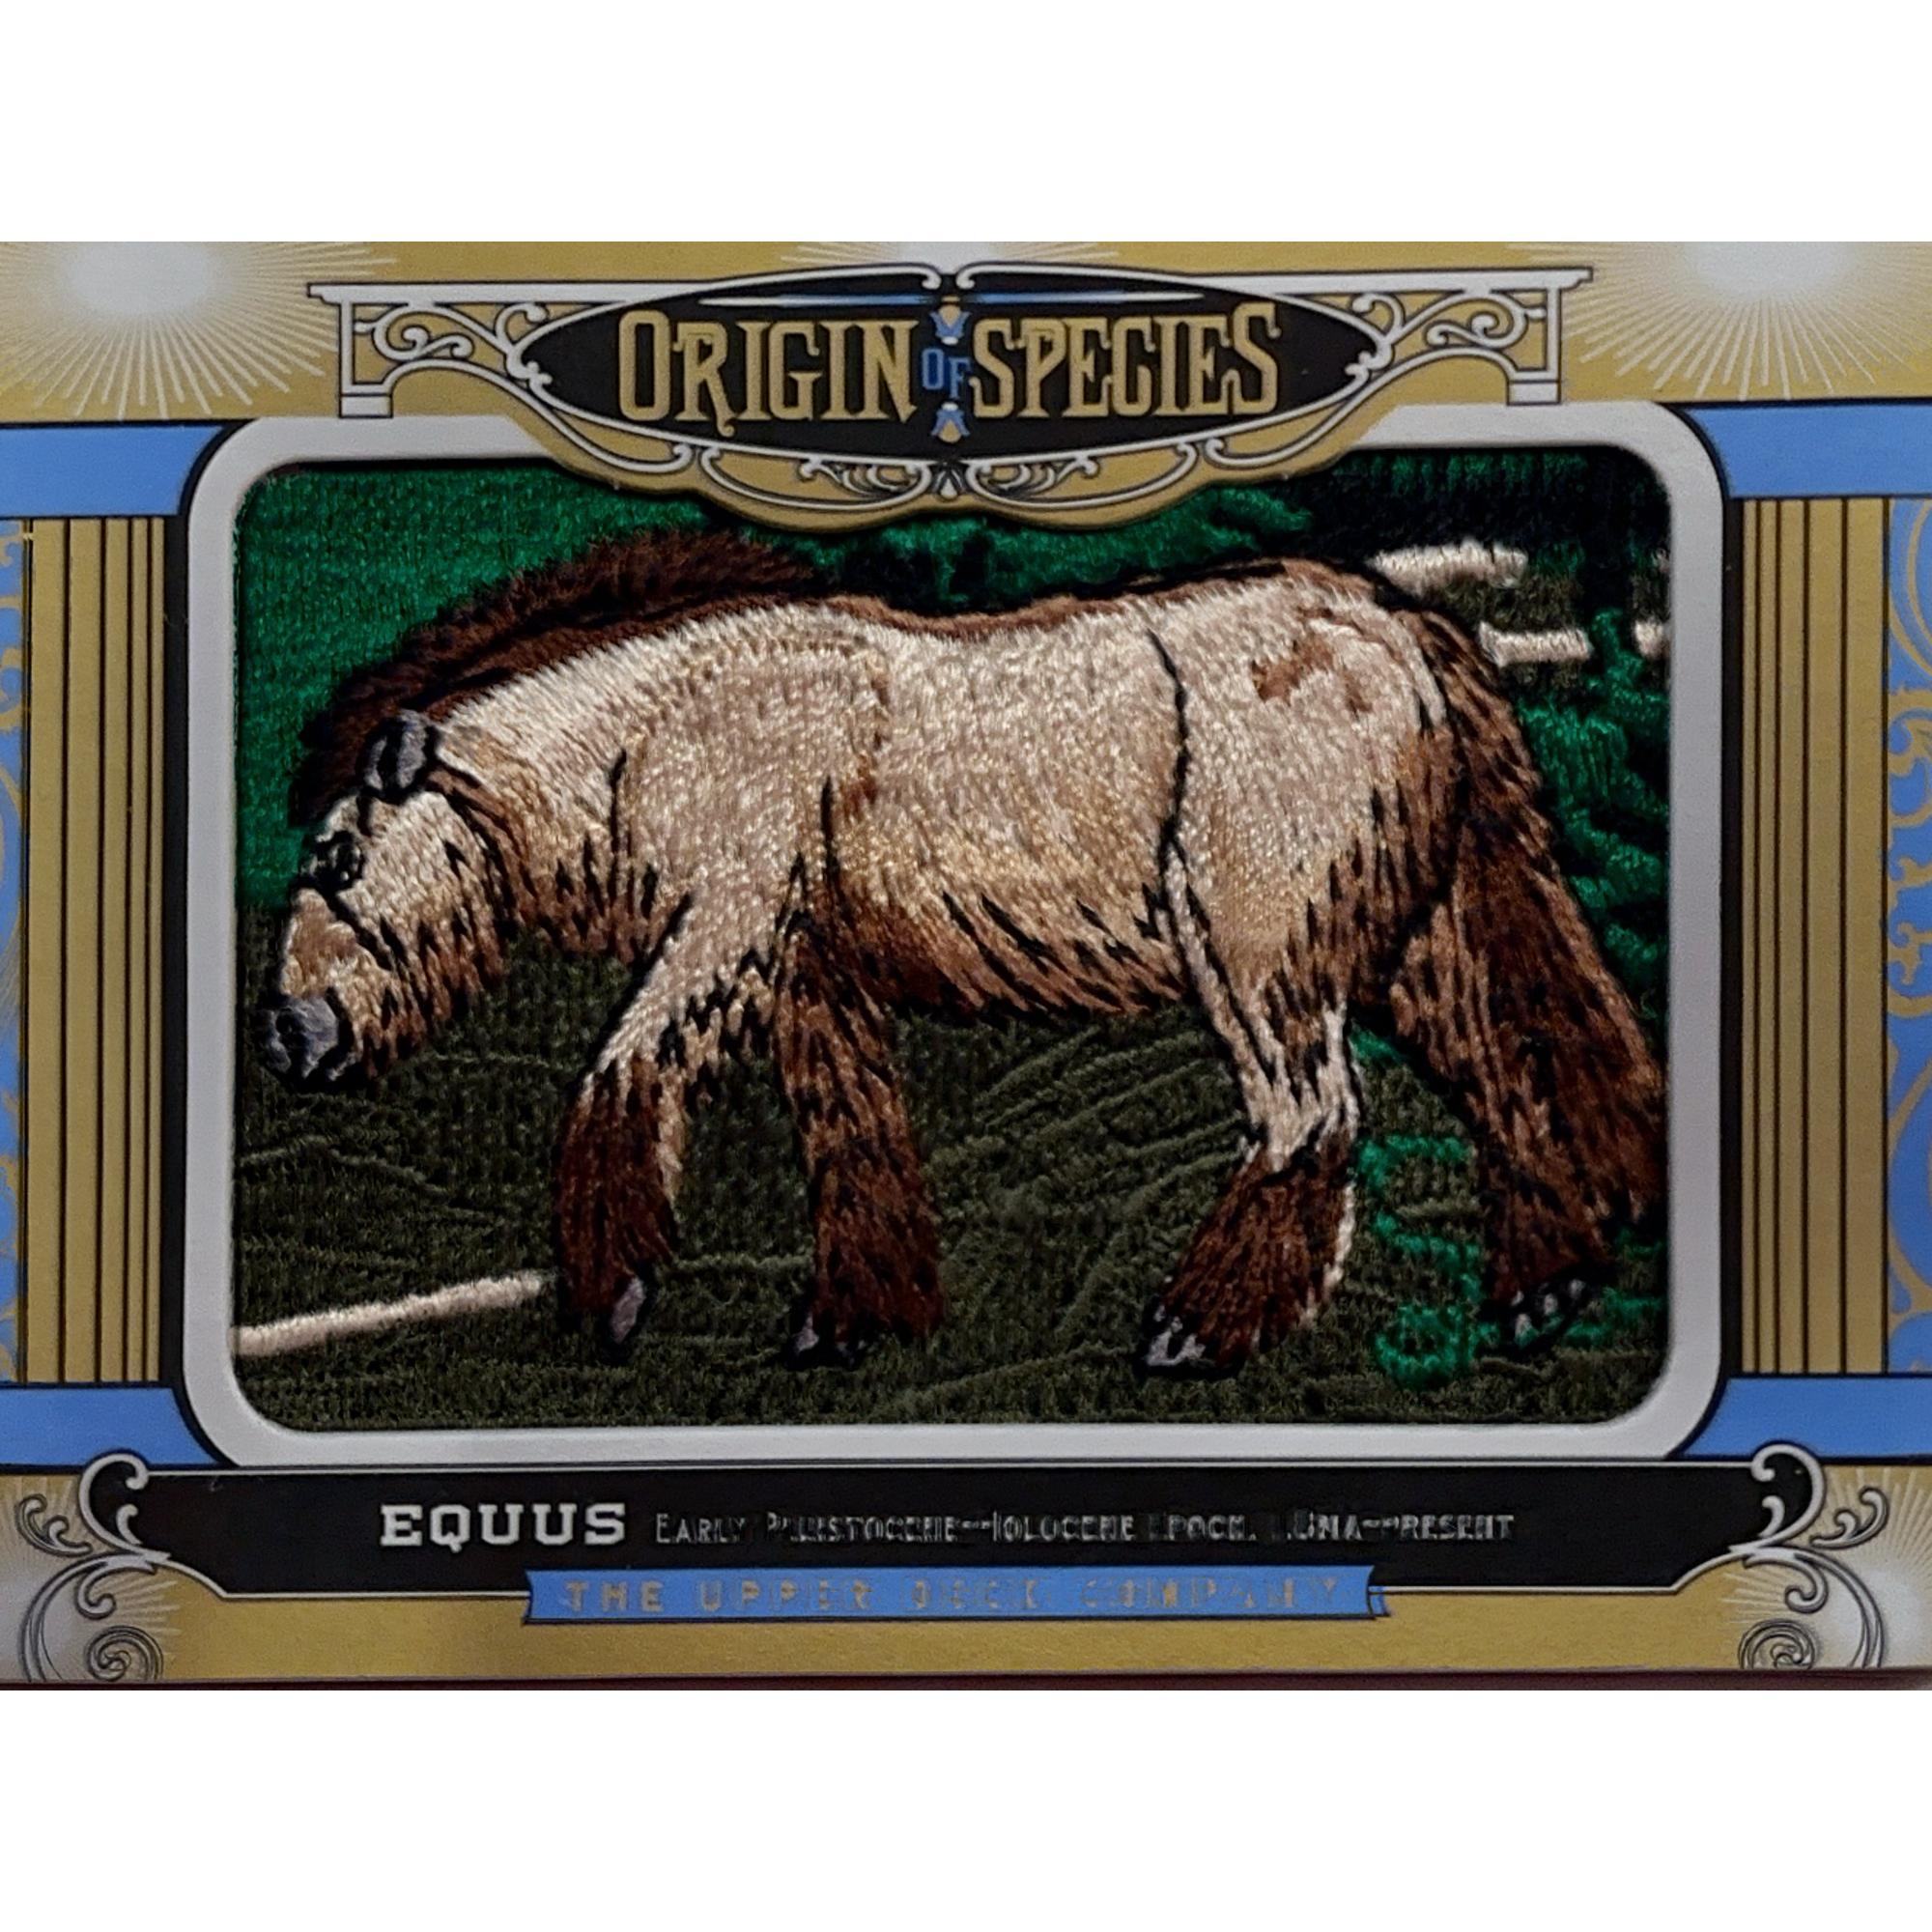 Upper deck, Equus patch Prehistoric Online